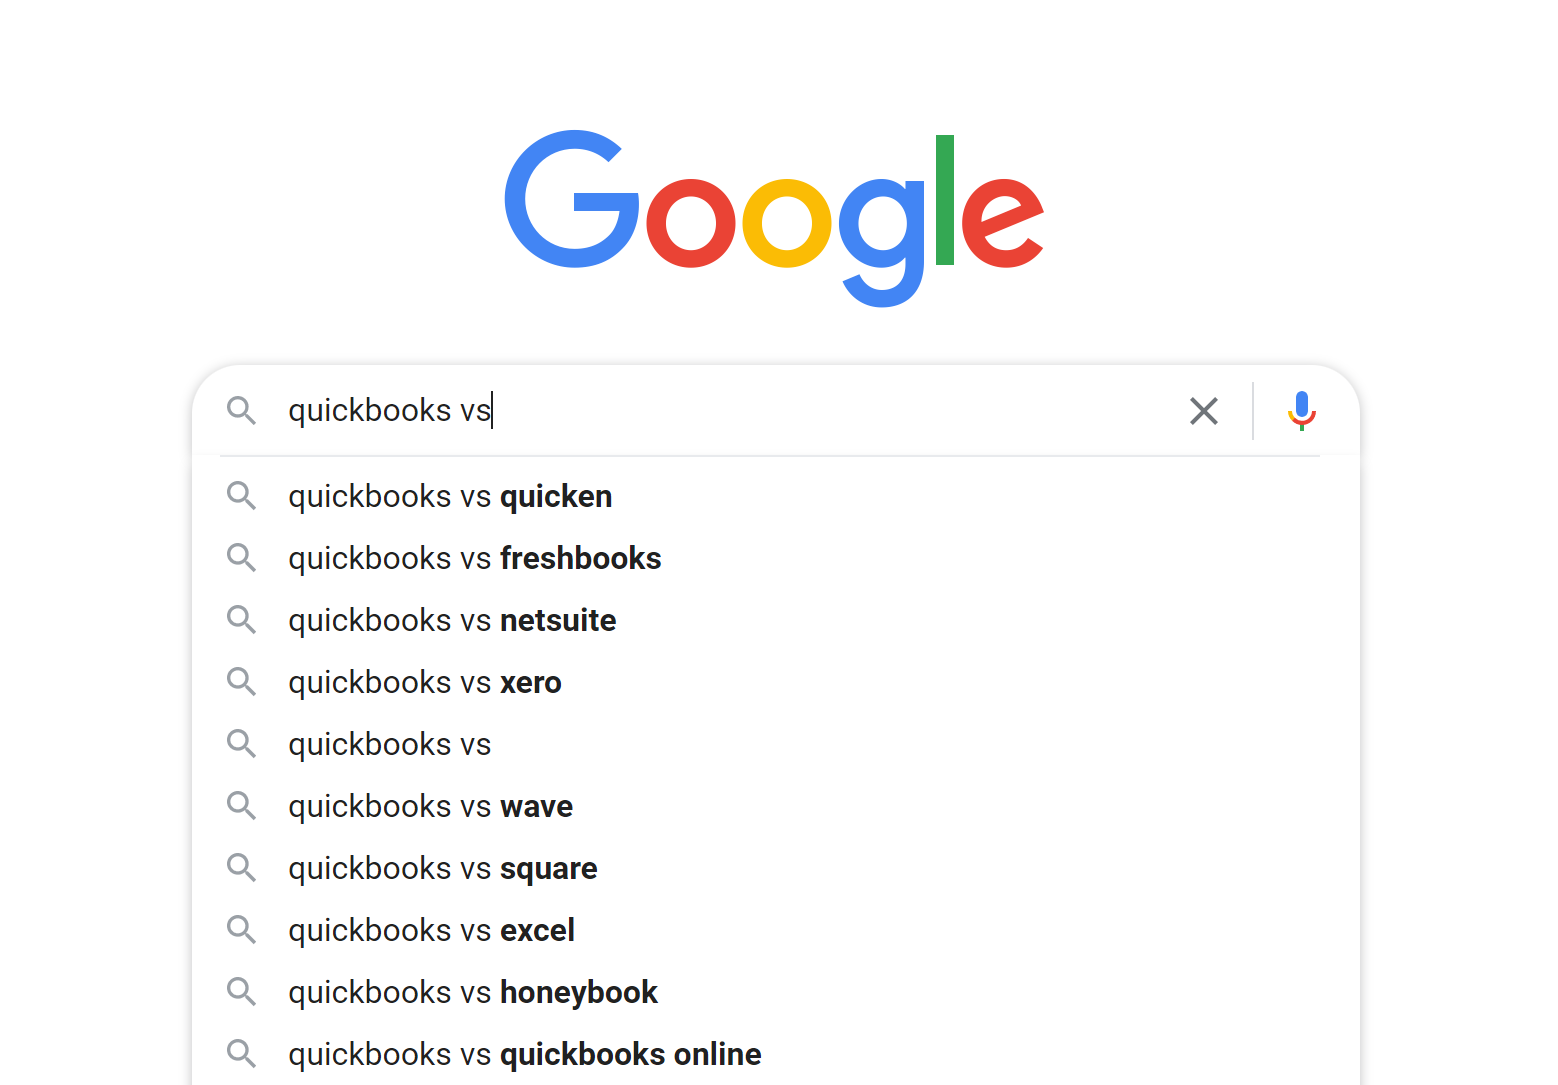 google search screenshot of quickbooks vs. keyword